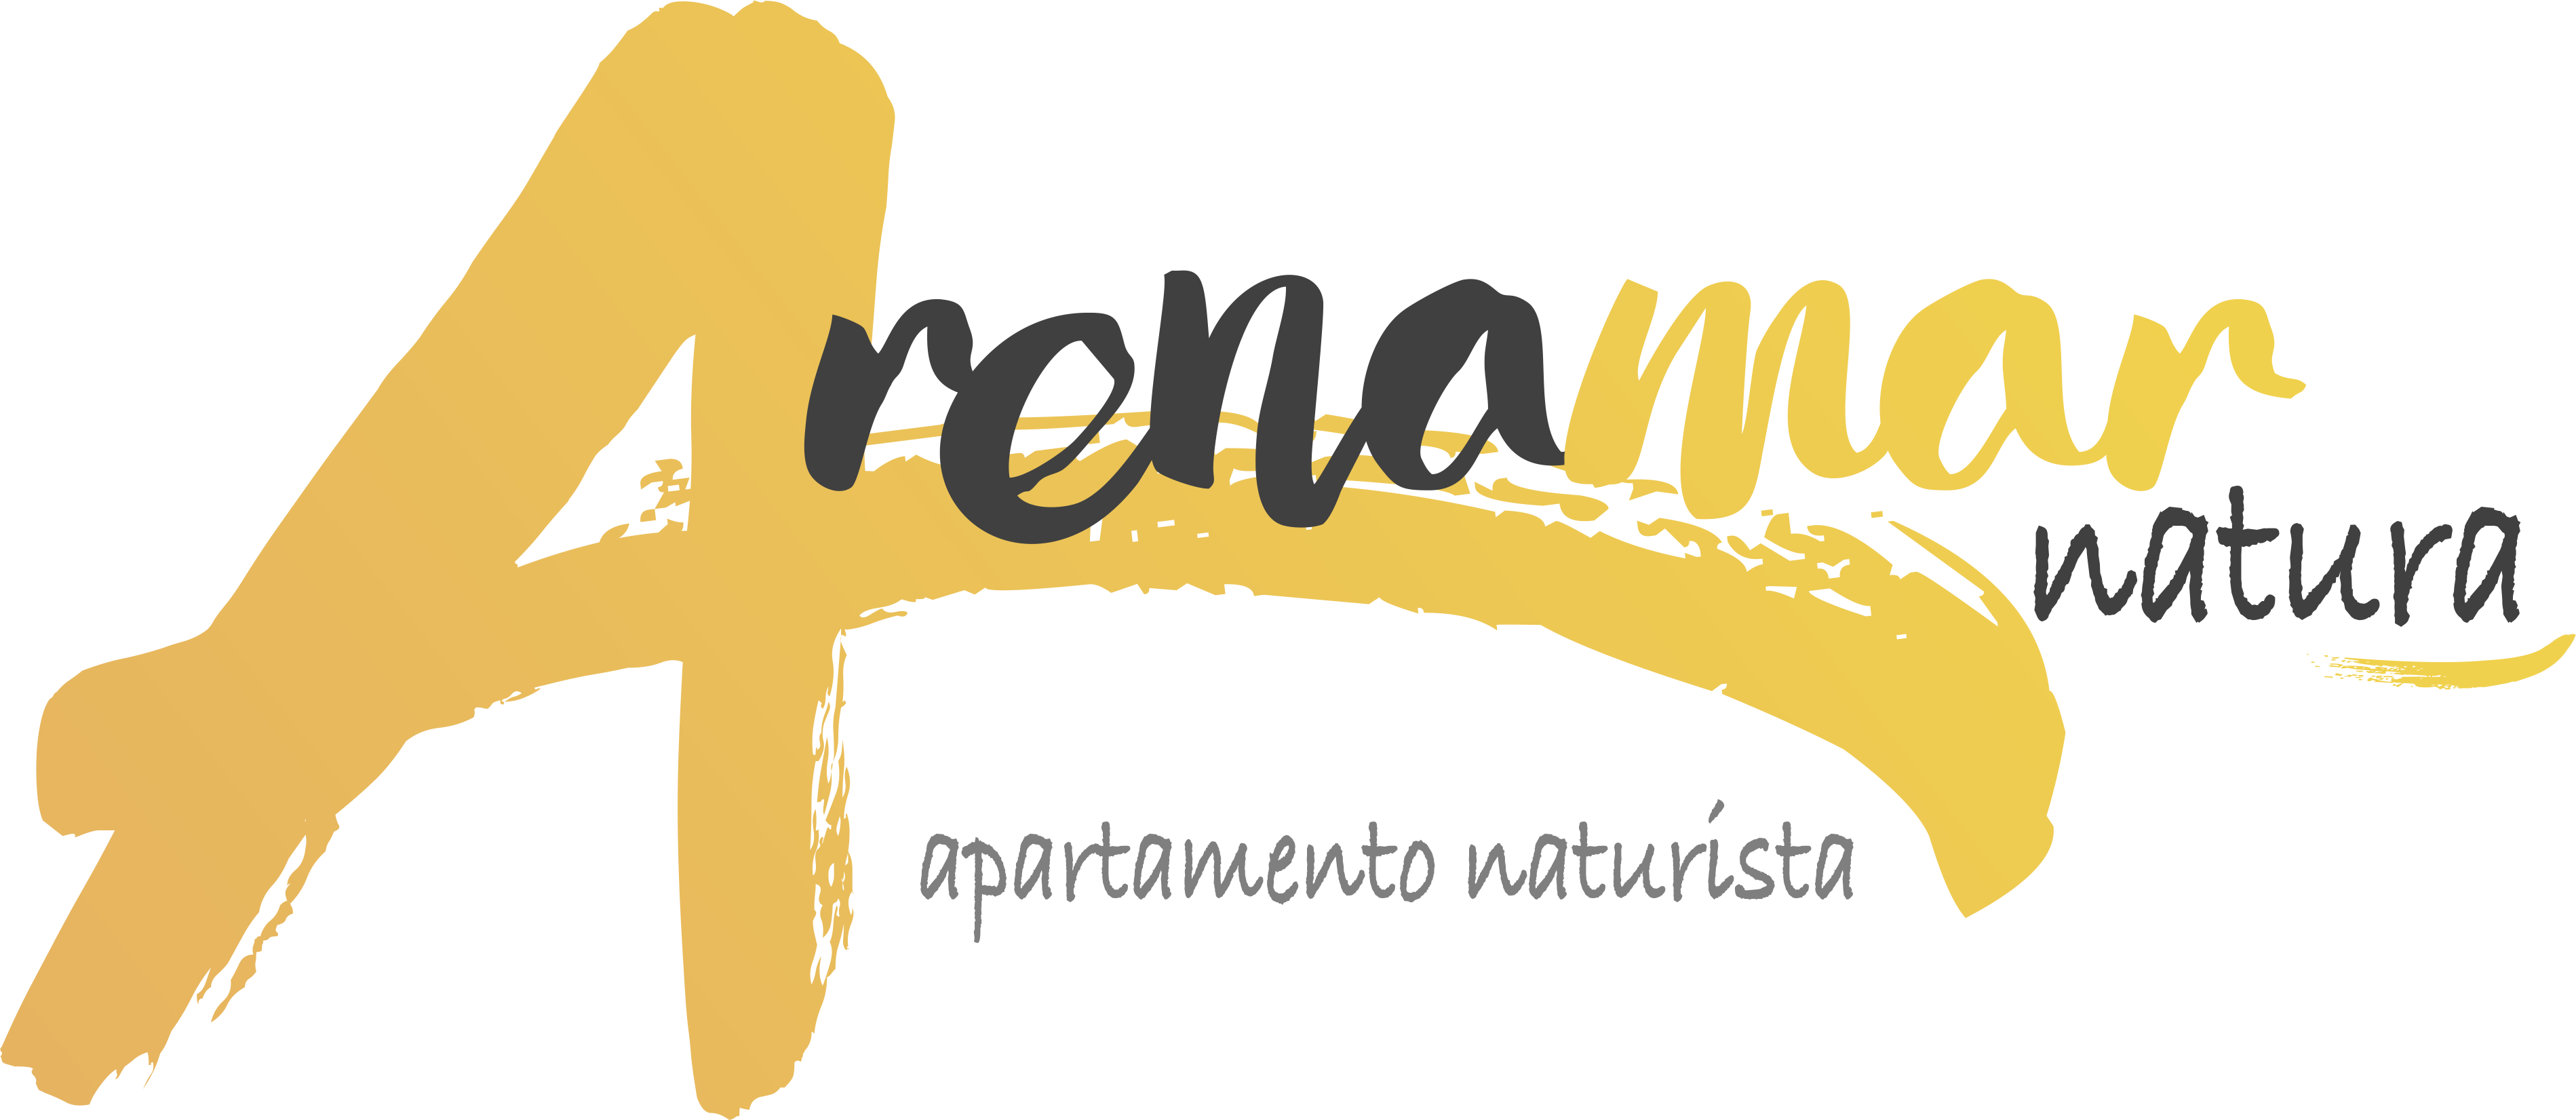 Arenamar Natura | Apartamento naturista